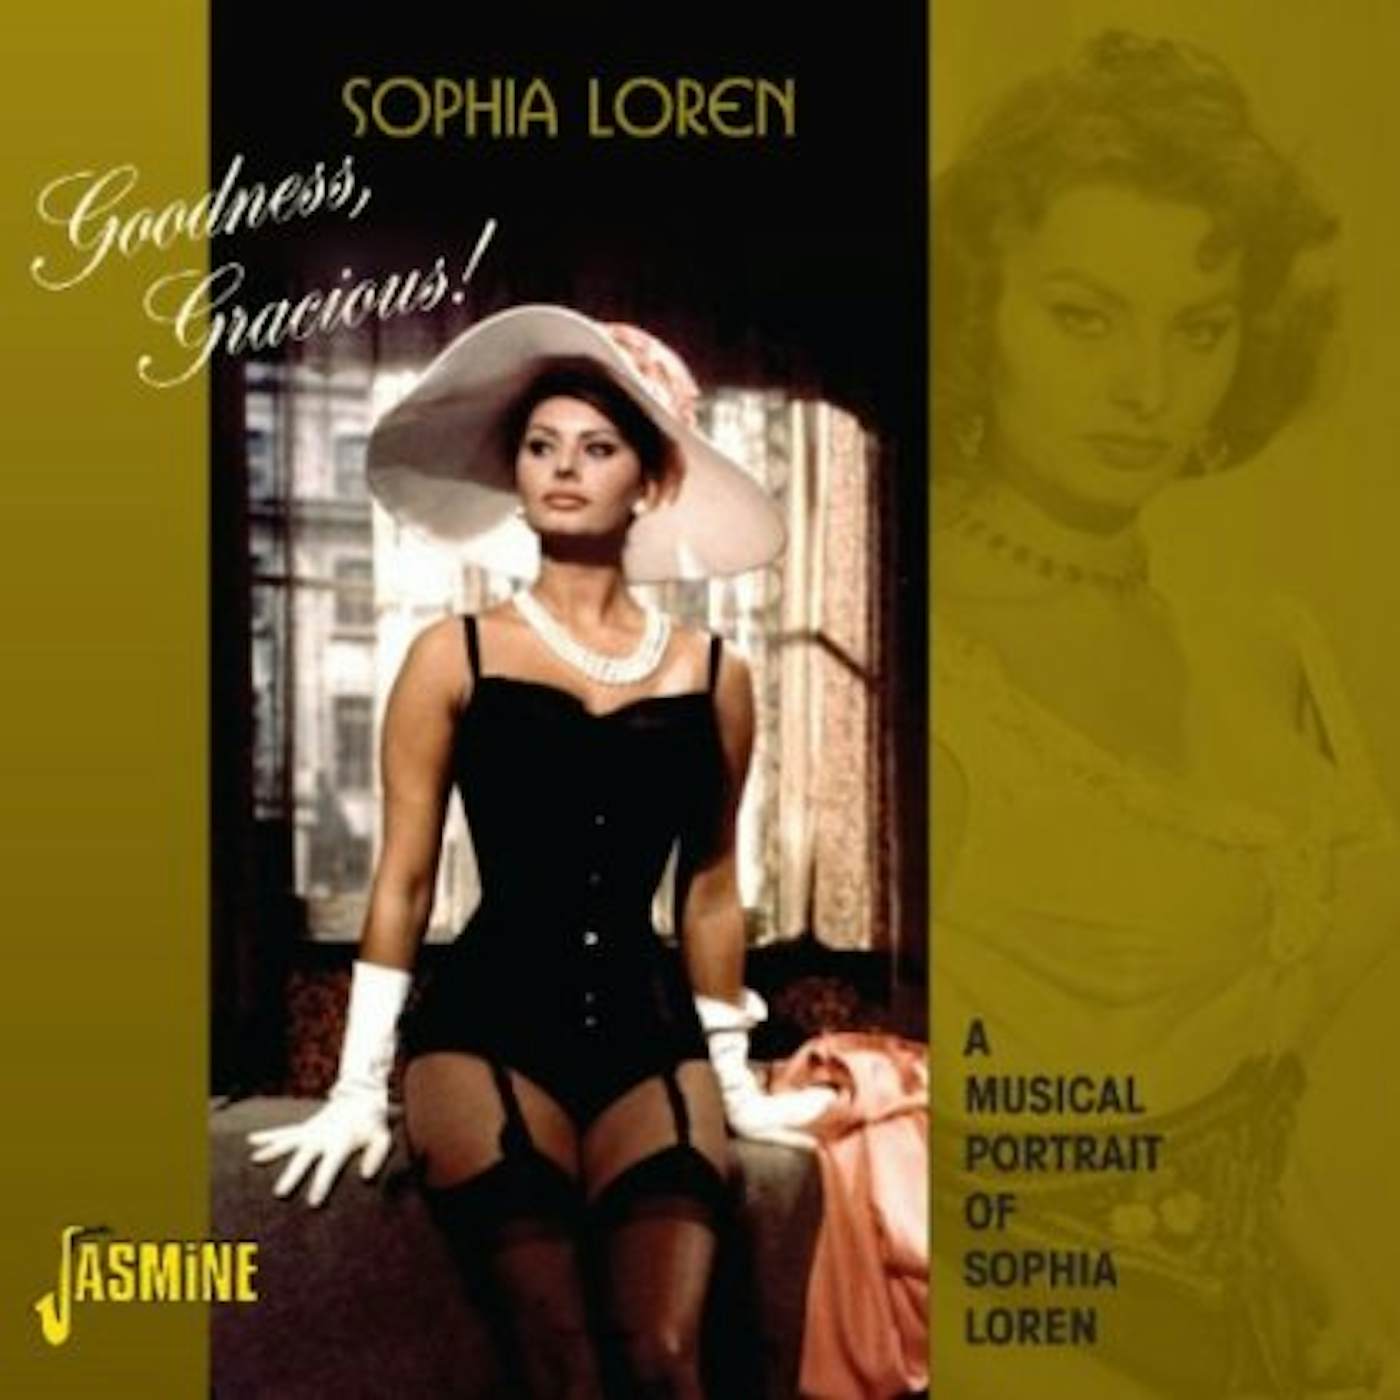 Sophia Loren GODNESS GRACIOUS CD